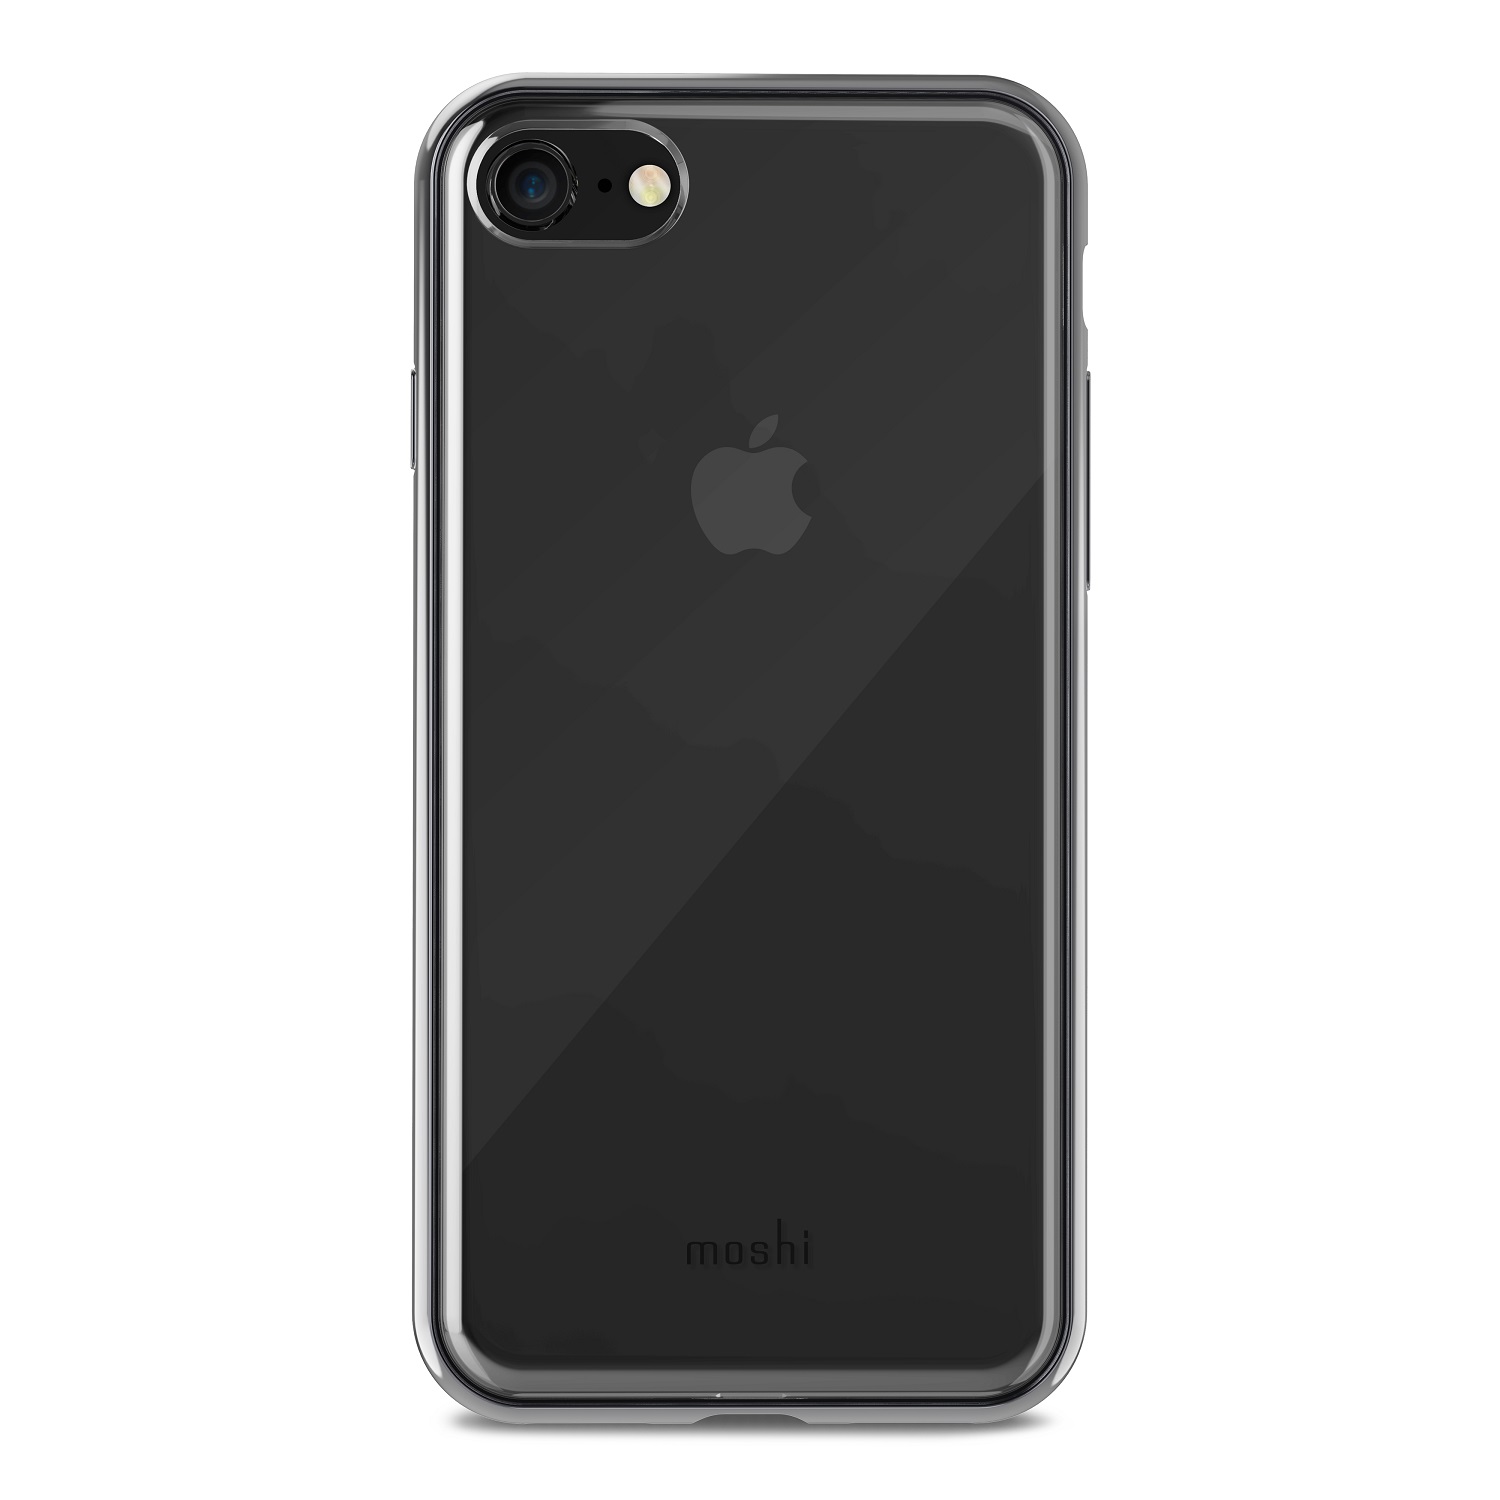 Moshi Vitros Case for iPhone 8/7